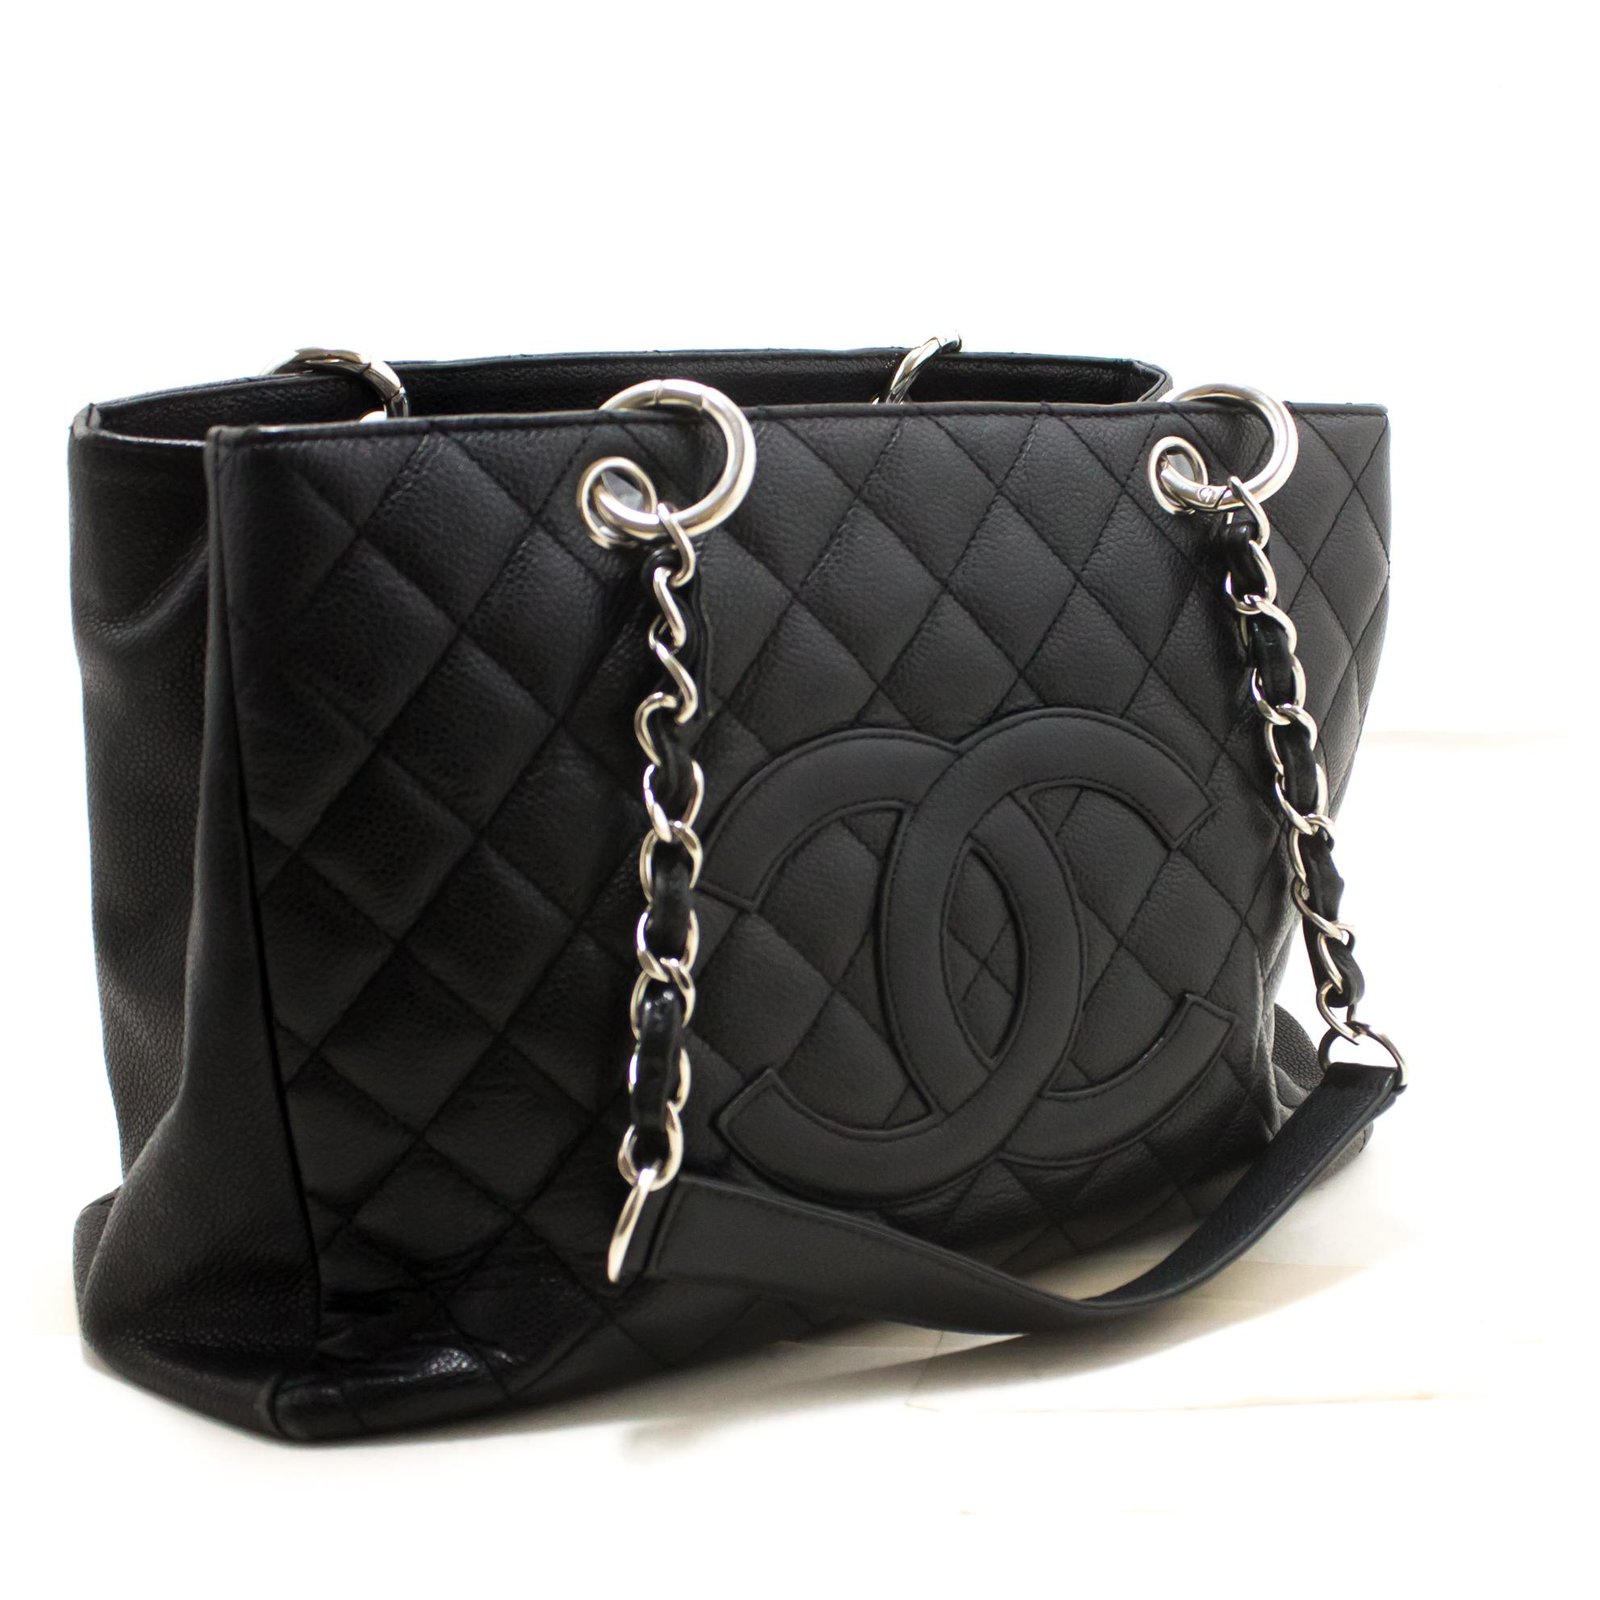 Chanel Tote Handbags Ukg Pro